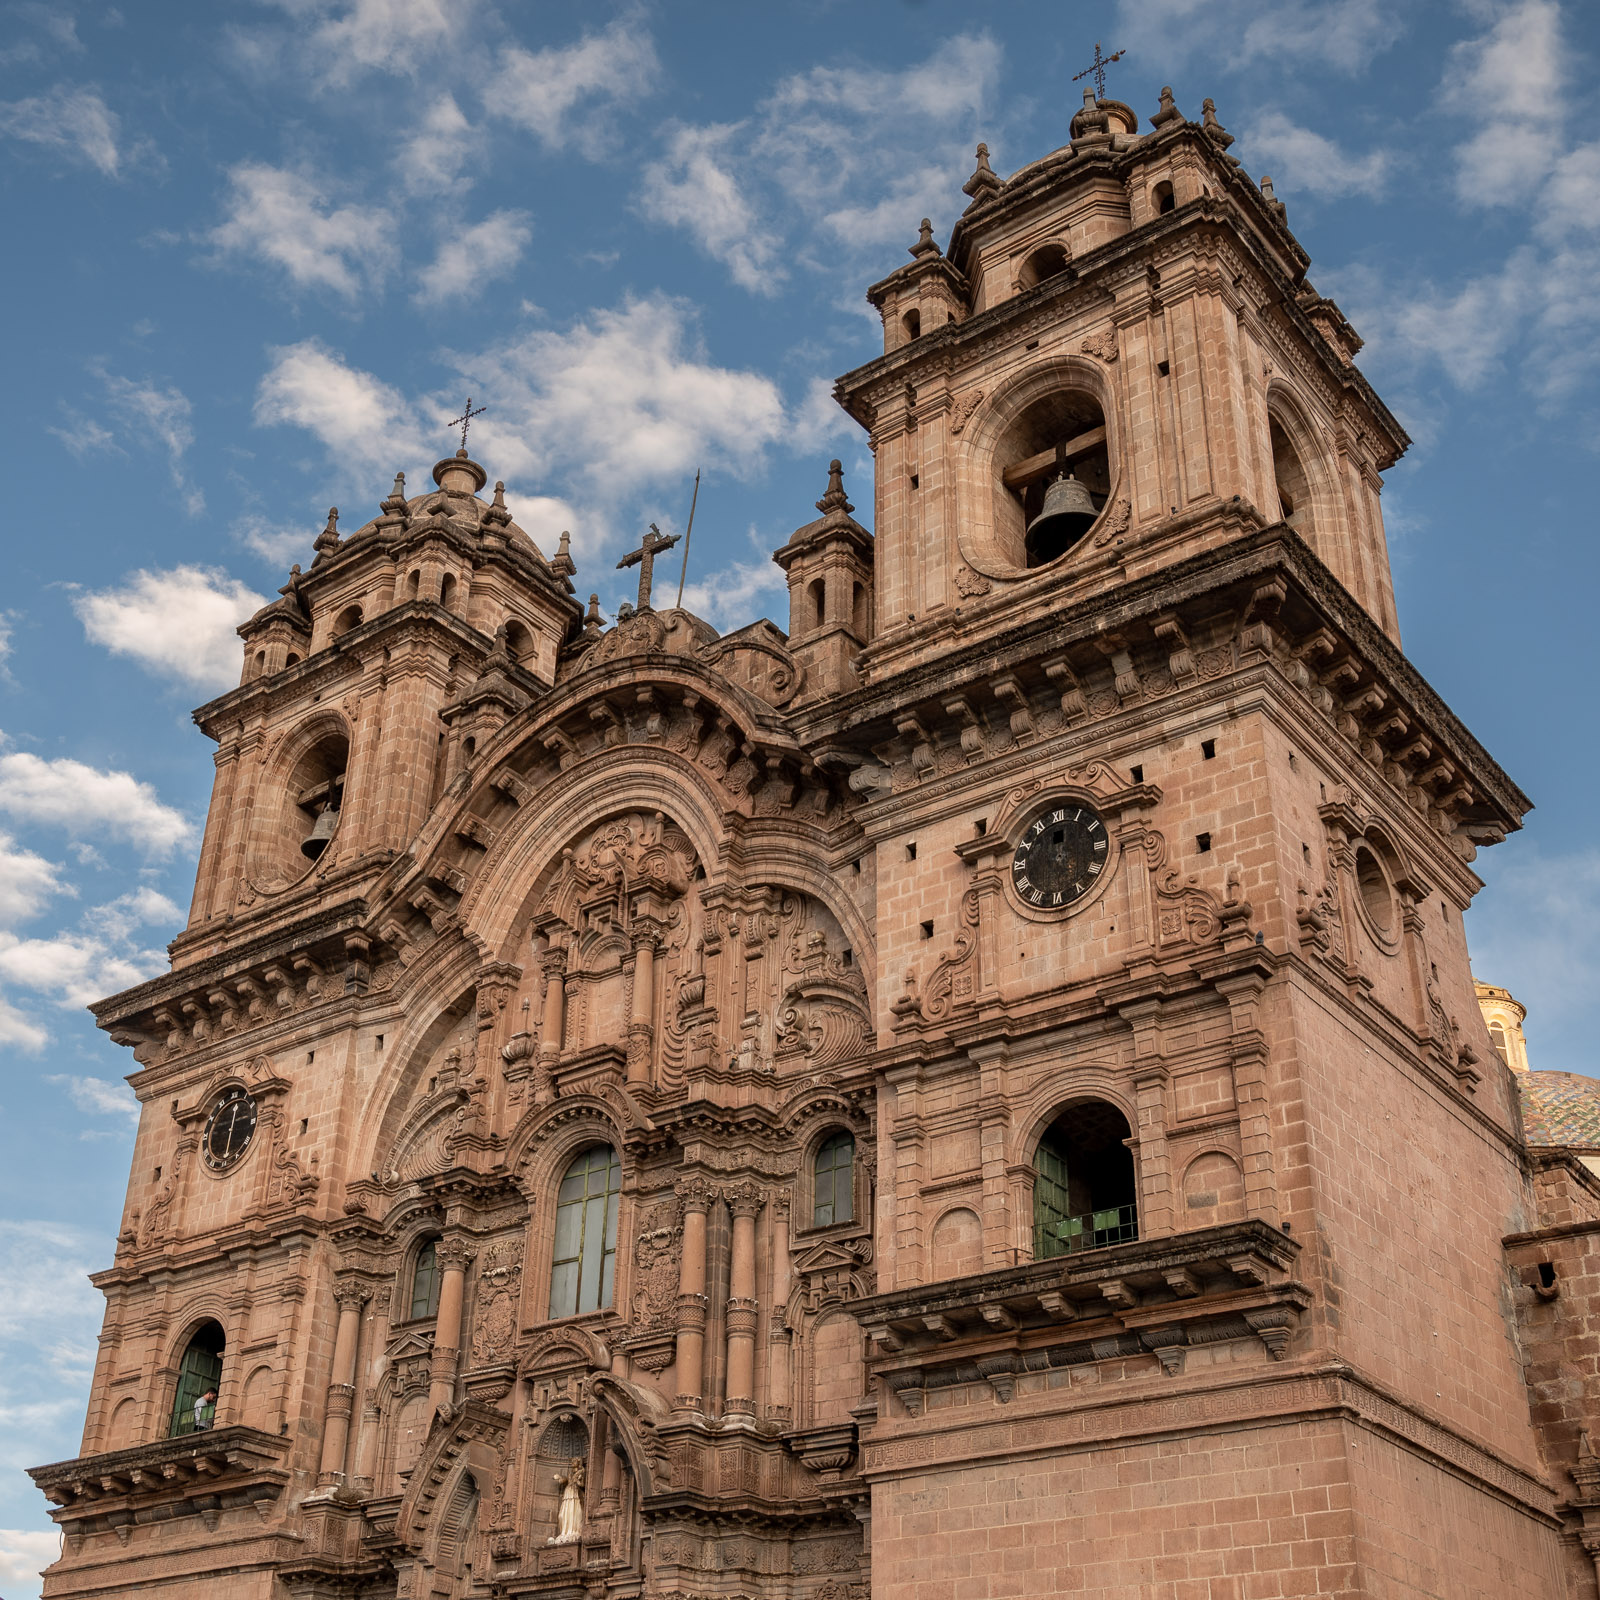 Ornate stone church towers rise into a blue sky in Cusco